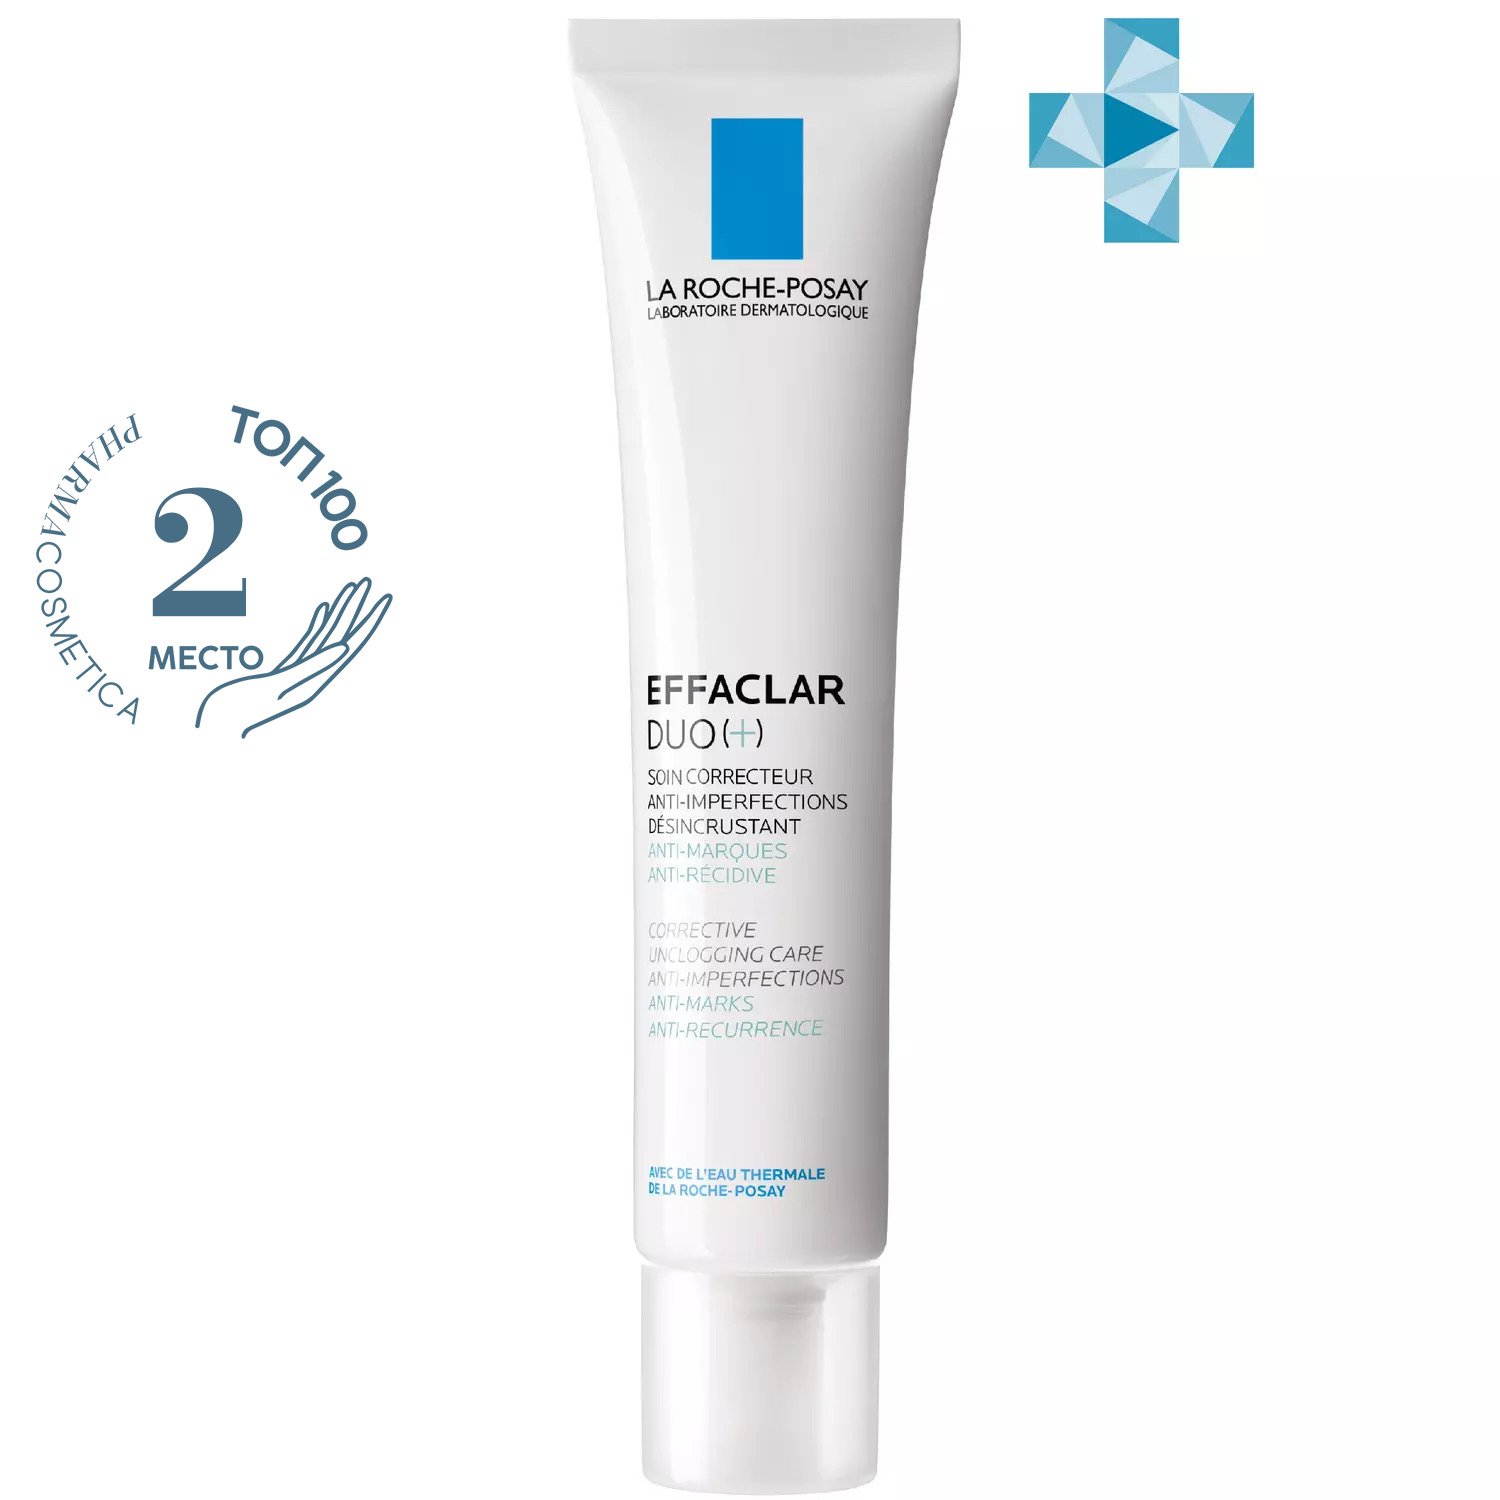 La Roche-Posay Корректирующий крем-гель для проблемной кожи против несовершенств и постакне DUO(+), 40 мл (La Roche-Posay, Effaclar)